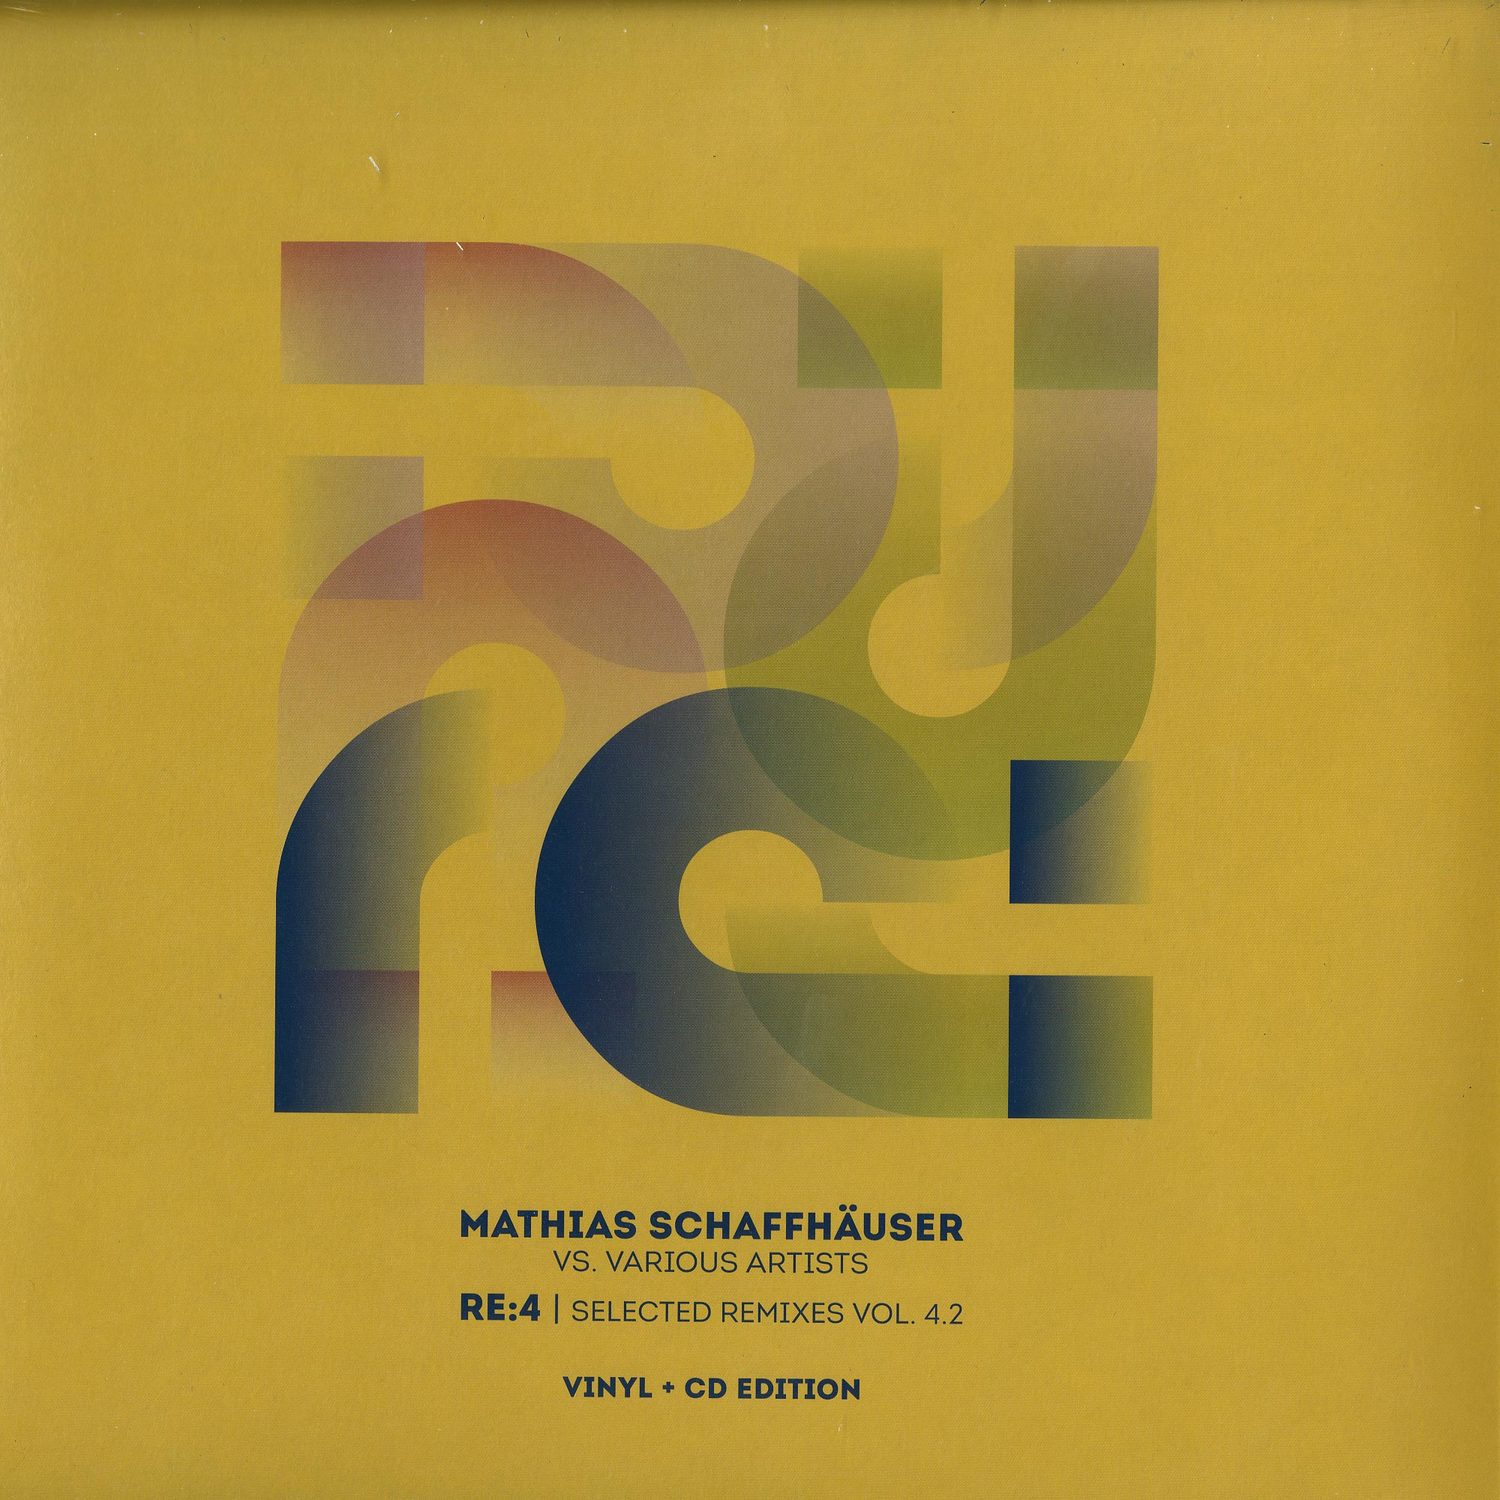 Mathias Schaffhauser vs. Various Artists - RE:4 - SELECTED REMIXES 2 